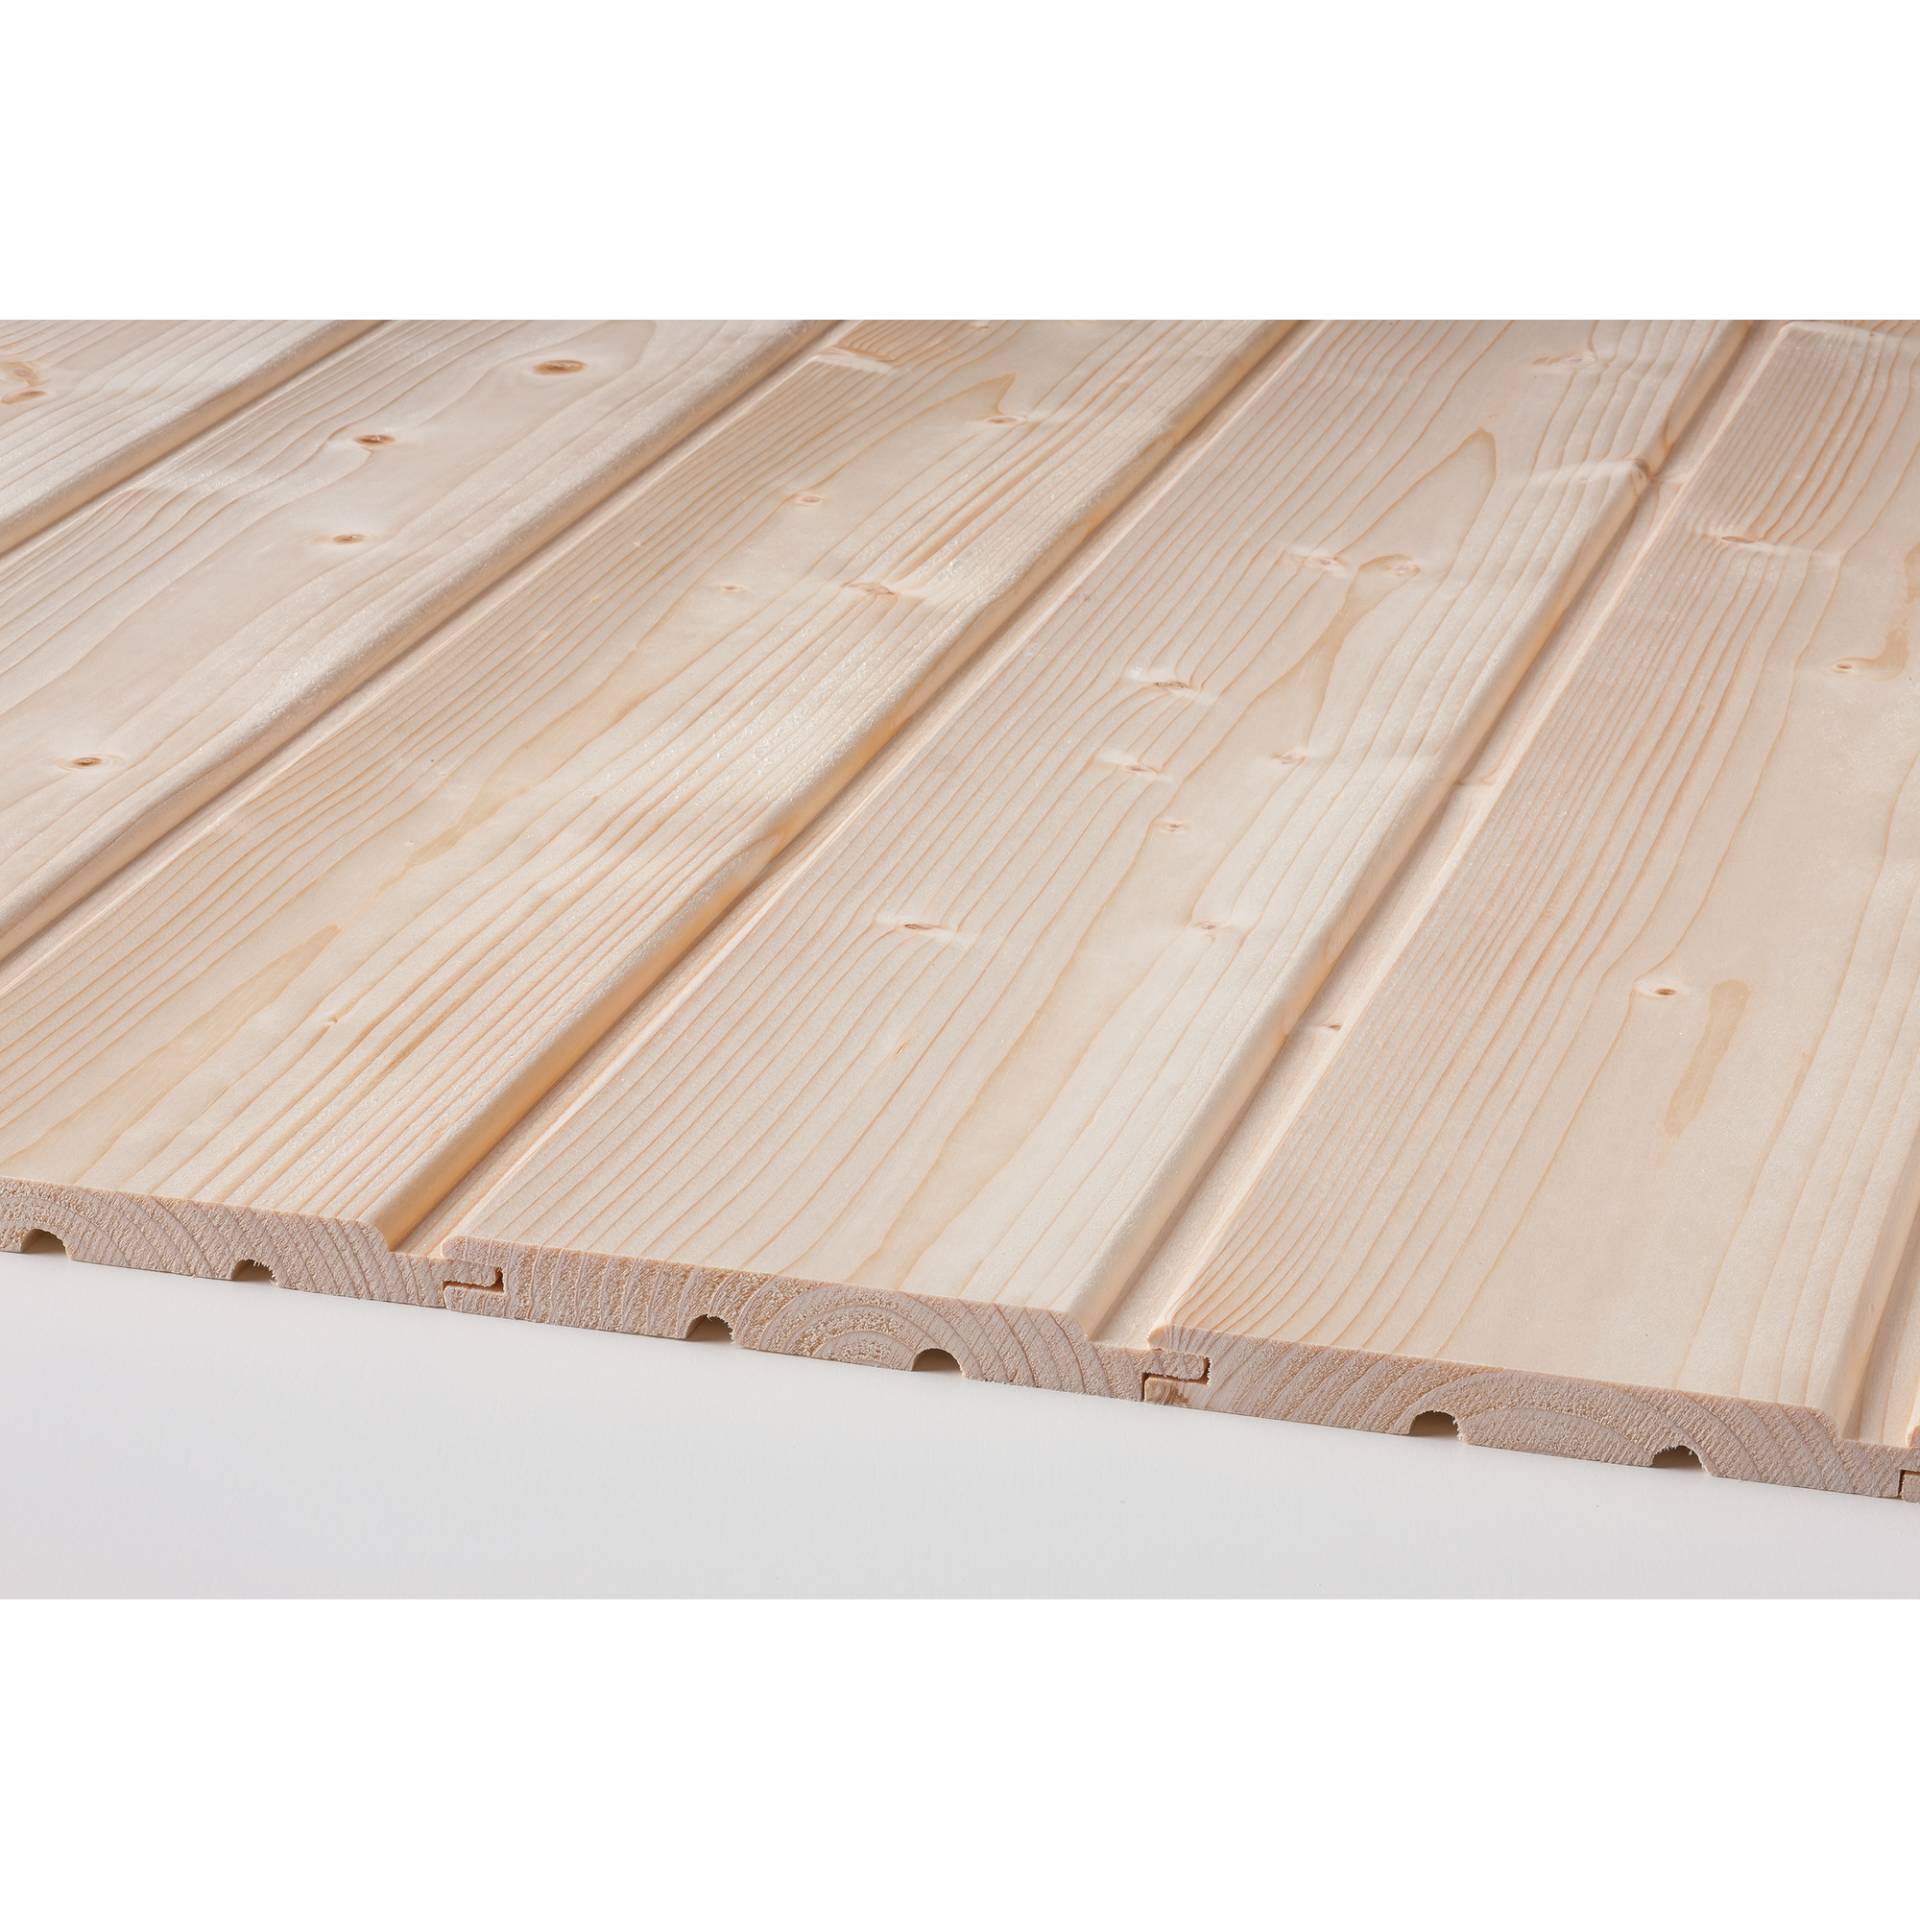 Klenk Holz Profilholz Fichte/Tanne gehobelt 19 x 146 x 3000 mm von Klenk Holz